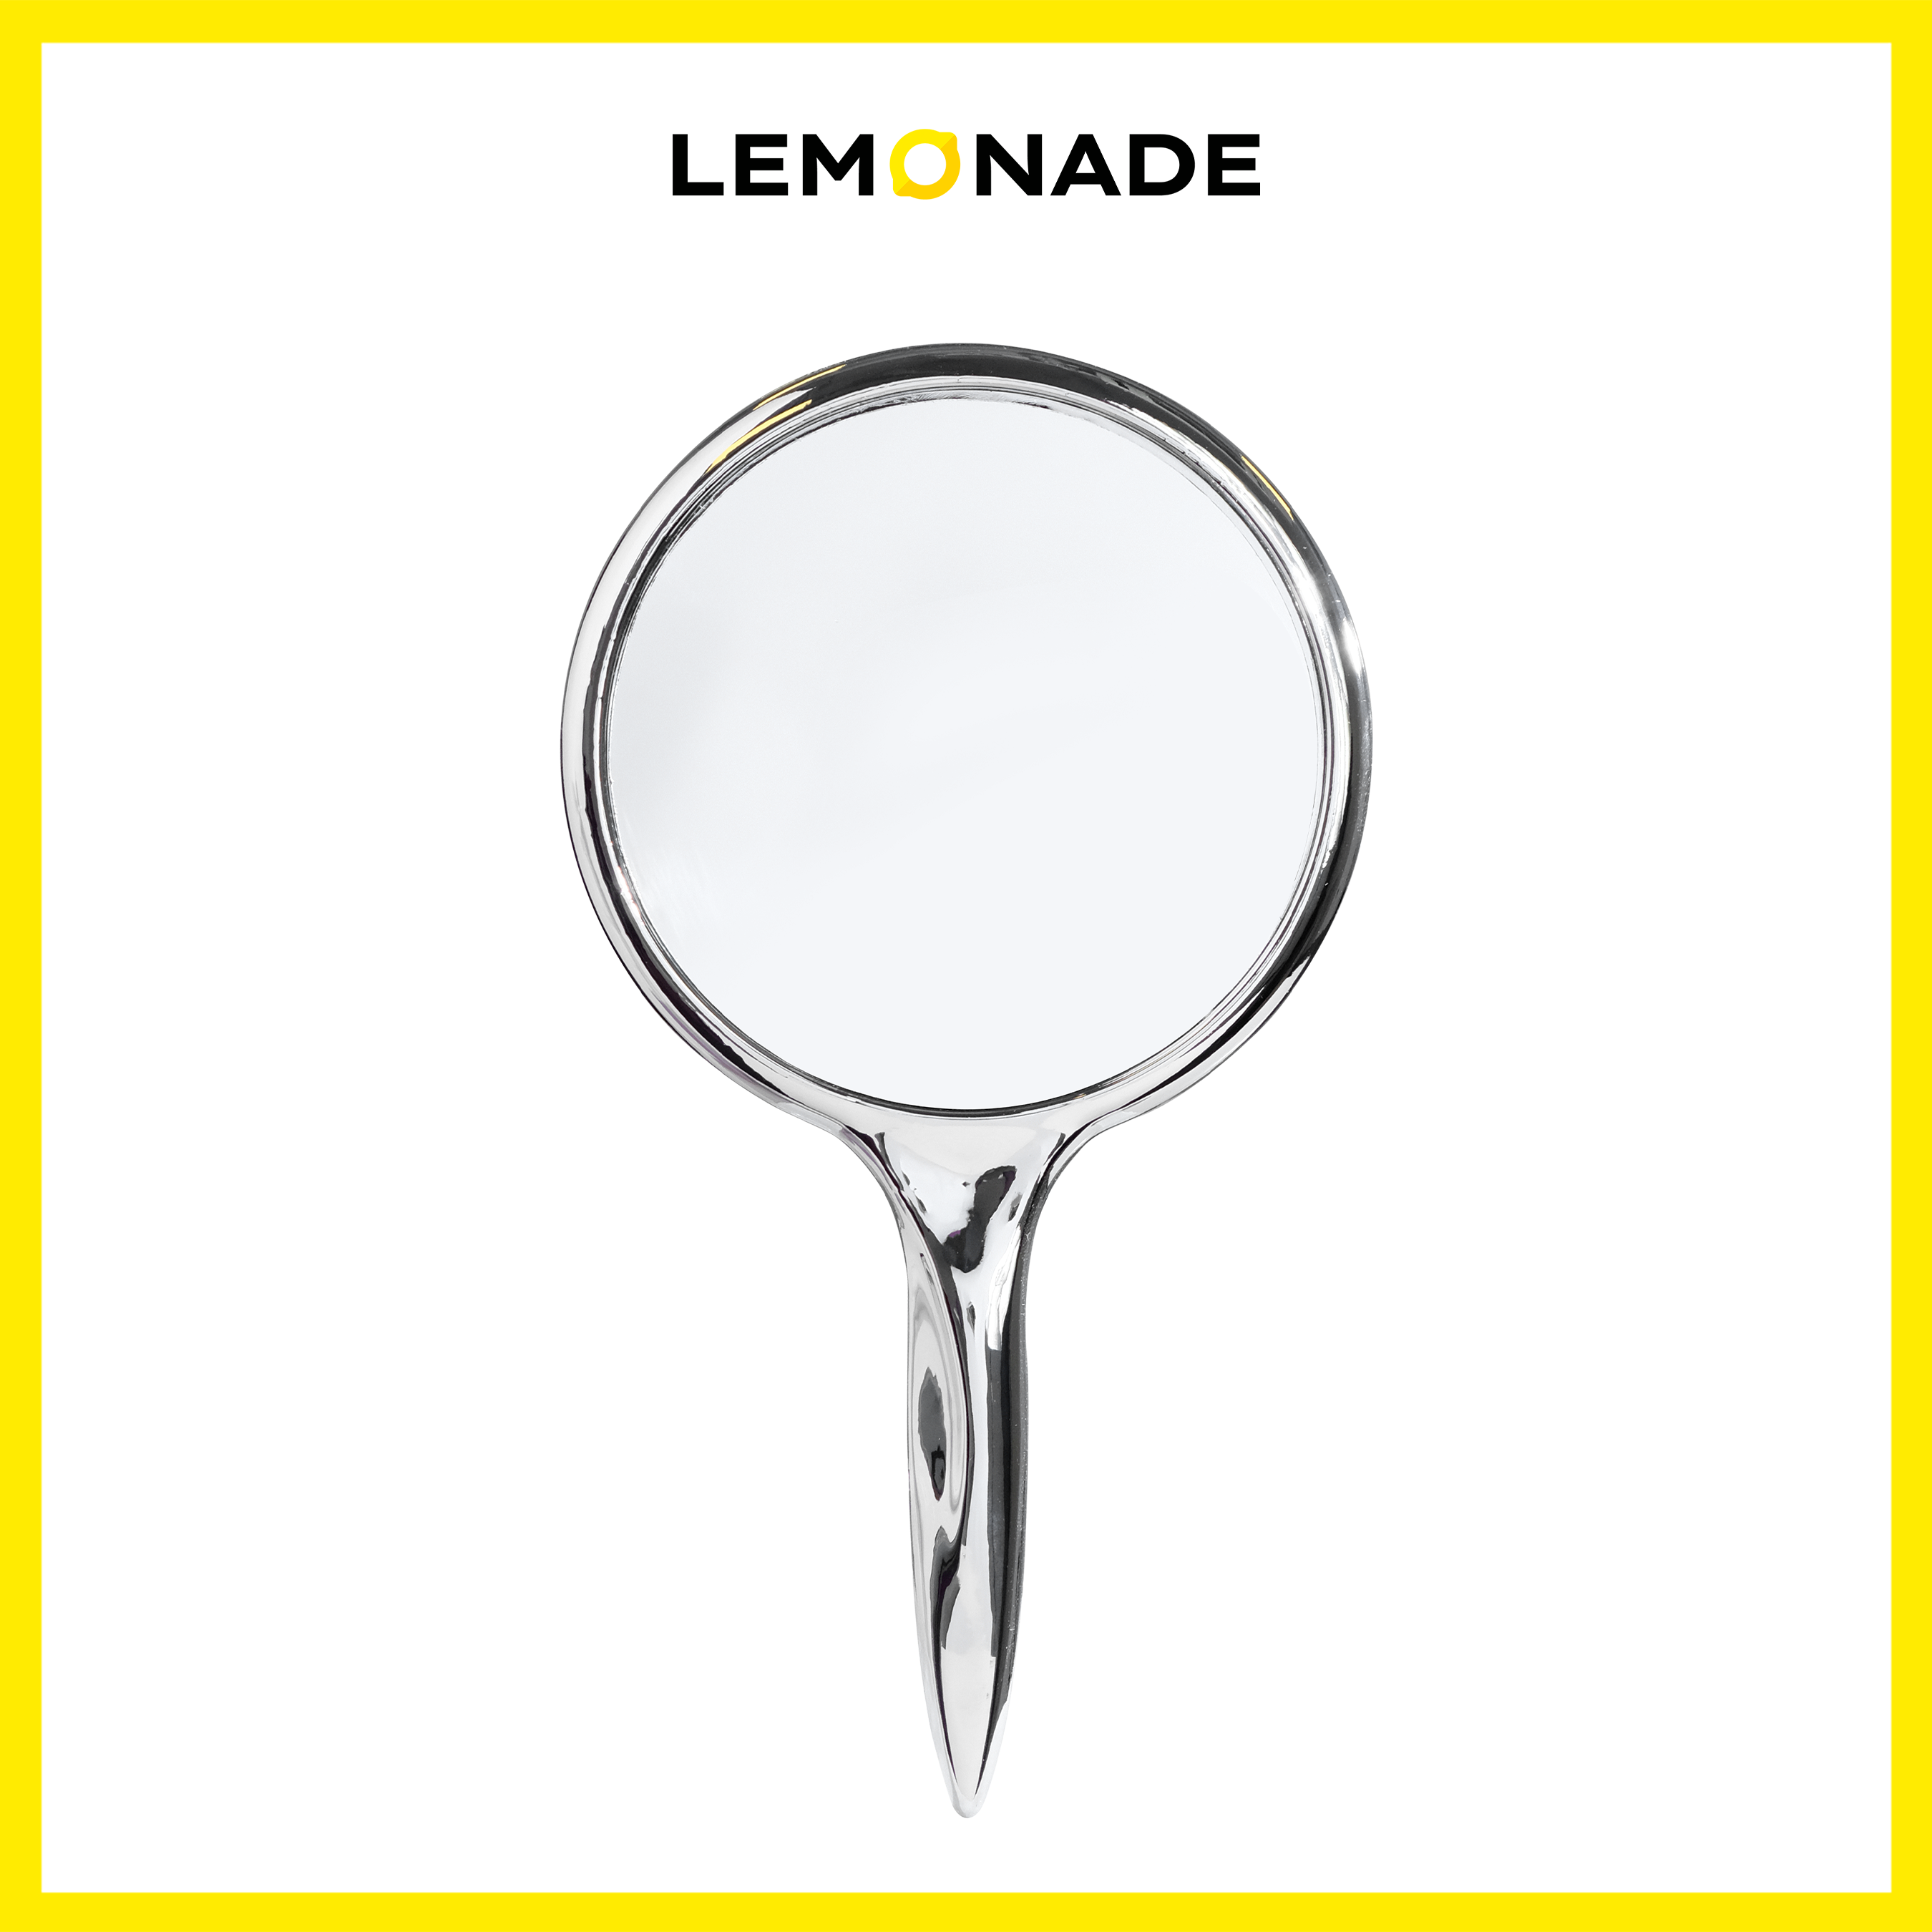 Gương cầm tay Lemonade Mirror Mirror 40g